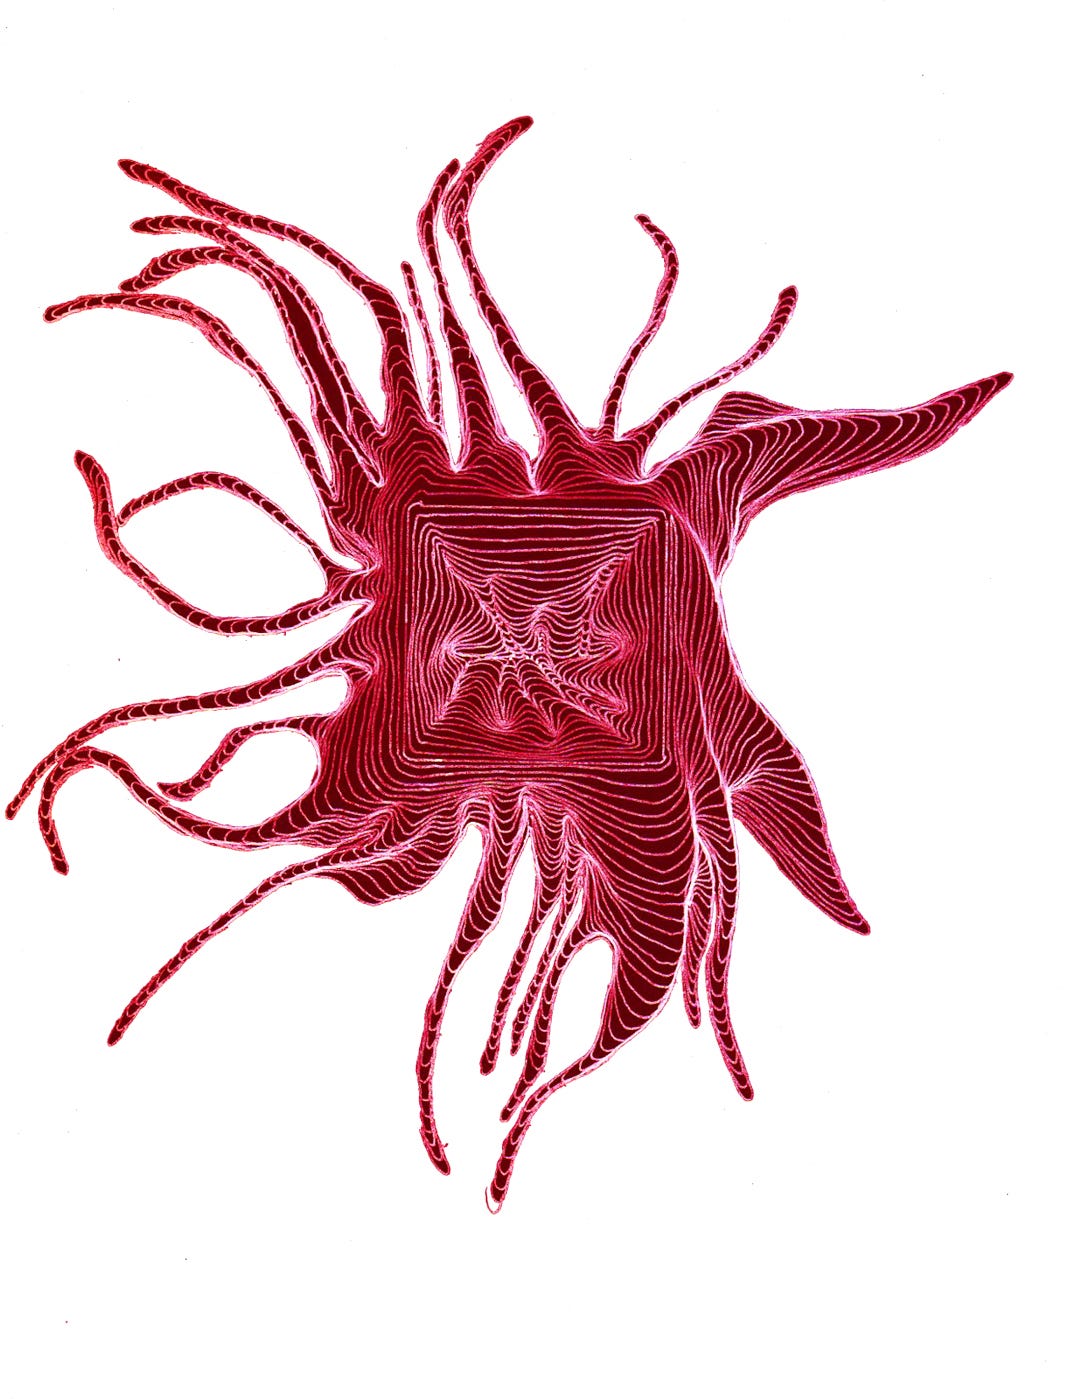 Red amoeba like drawing